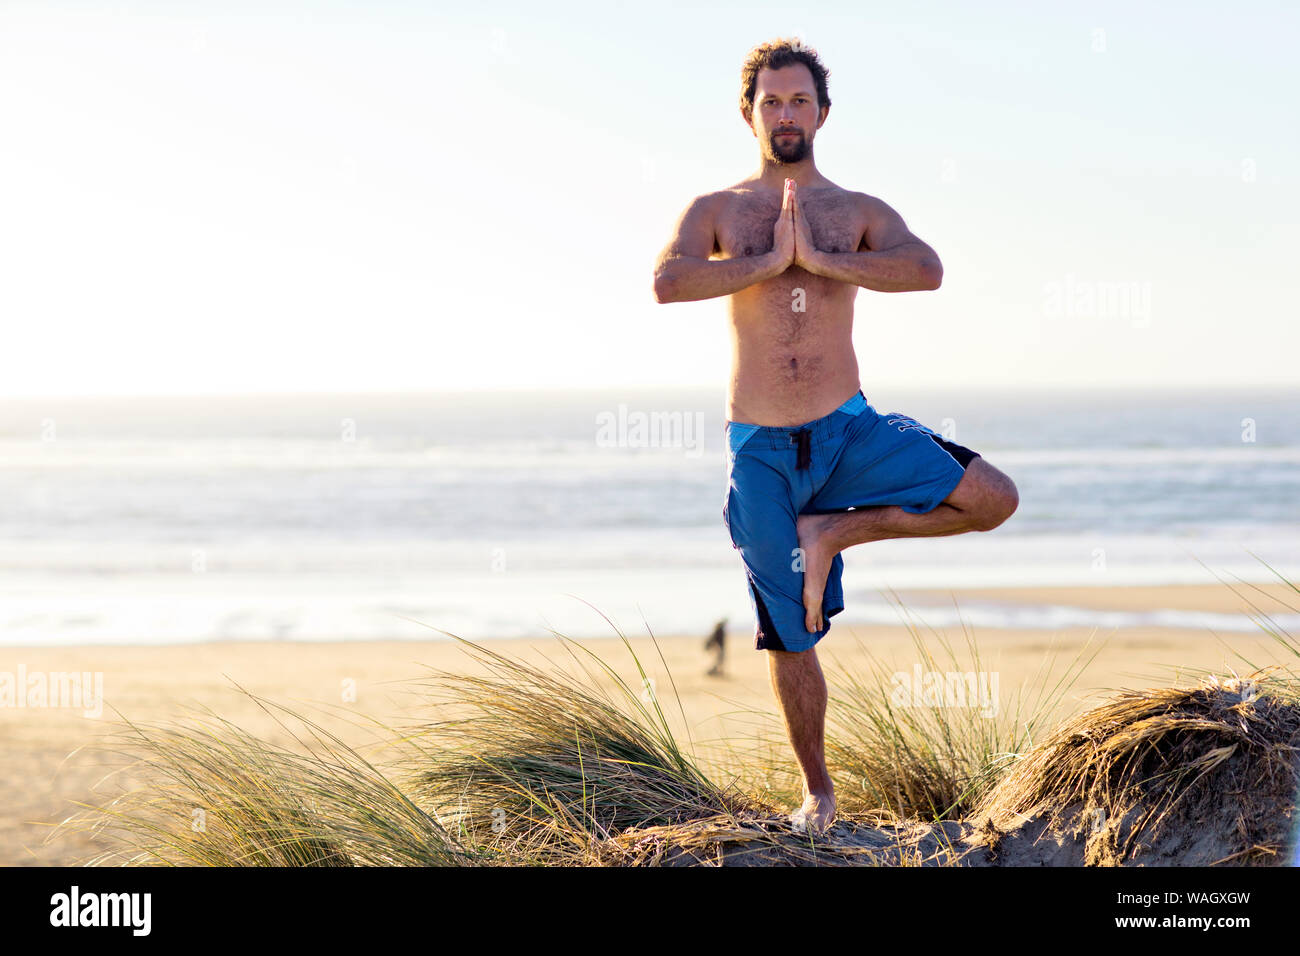 Man in yoga pose at beach. Stock Photo